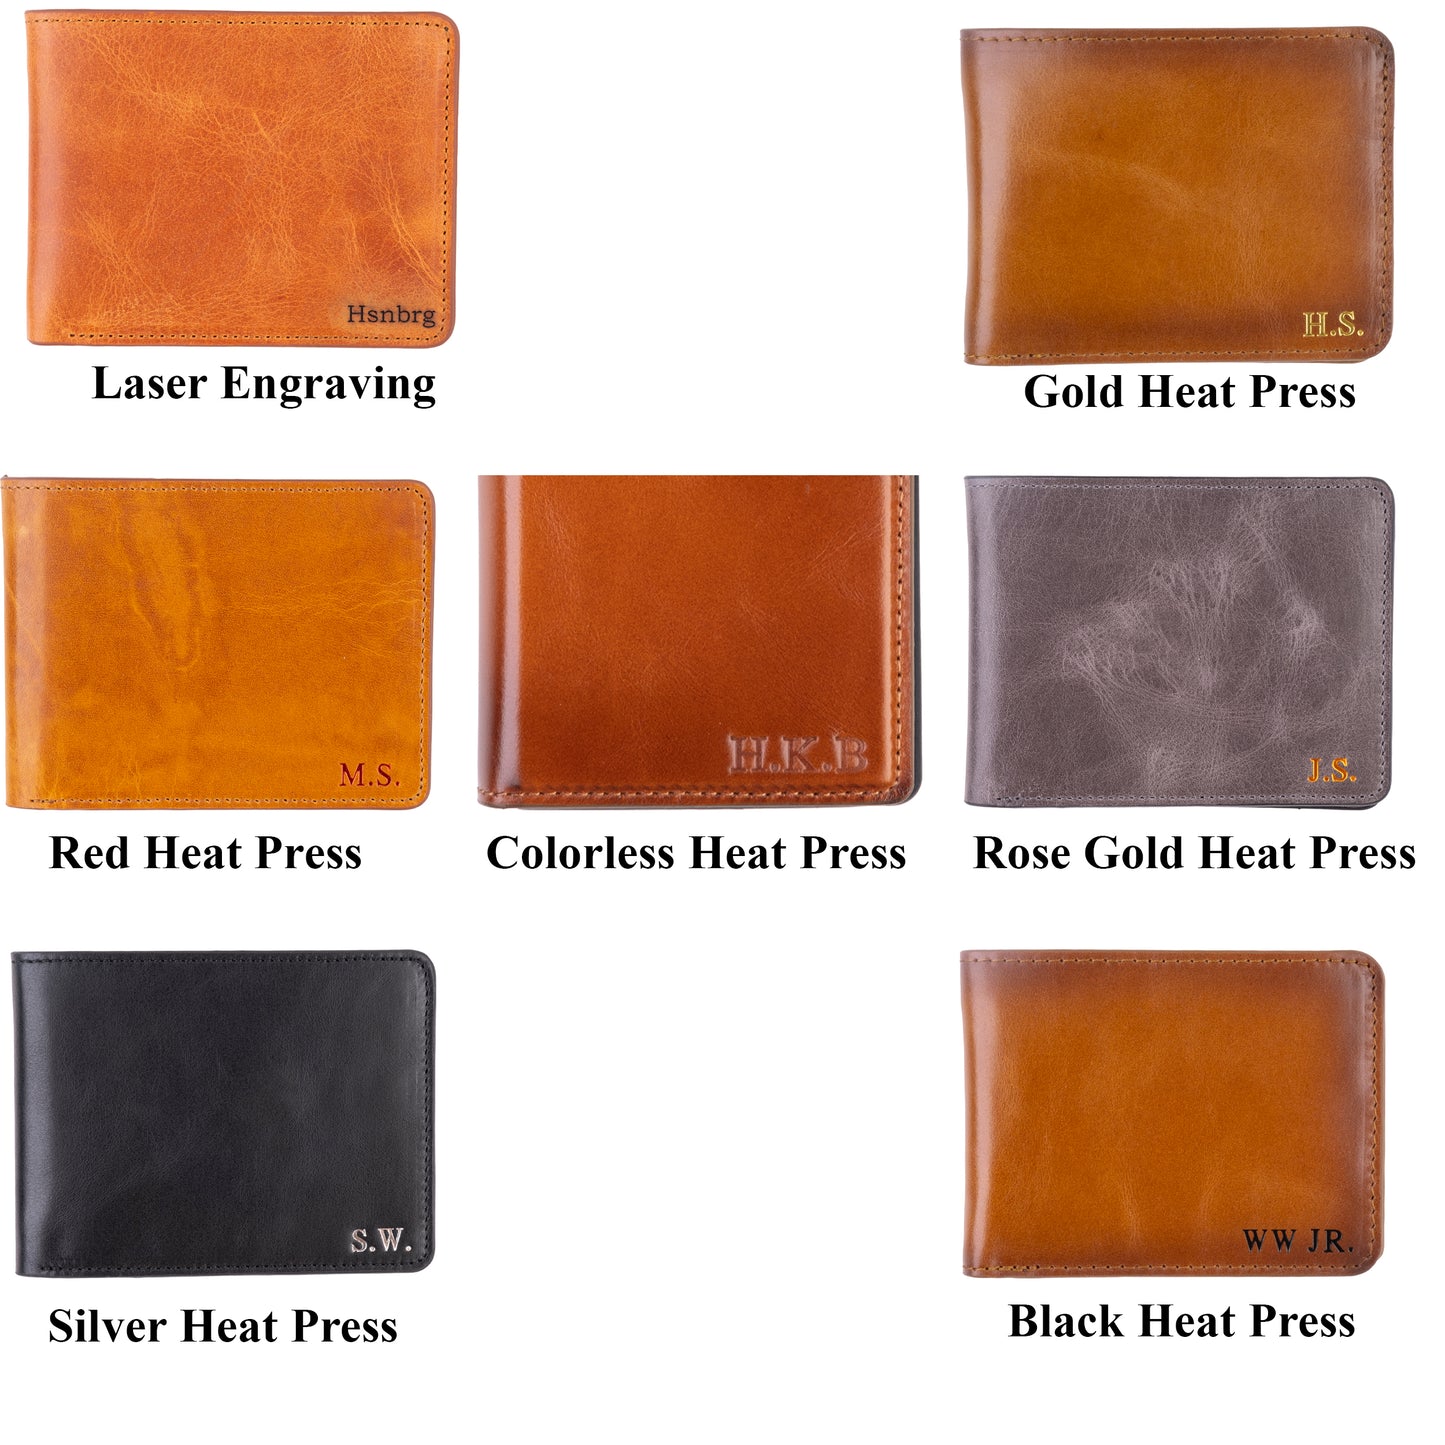 Apple iPad Pro (12.9") Leather Detachable Wallet Case - Rustic Black